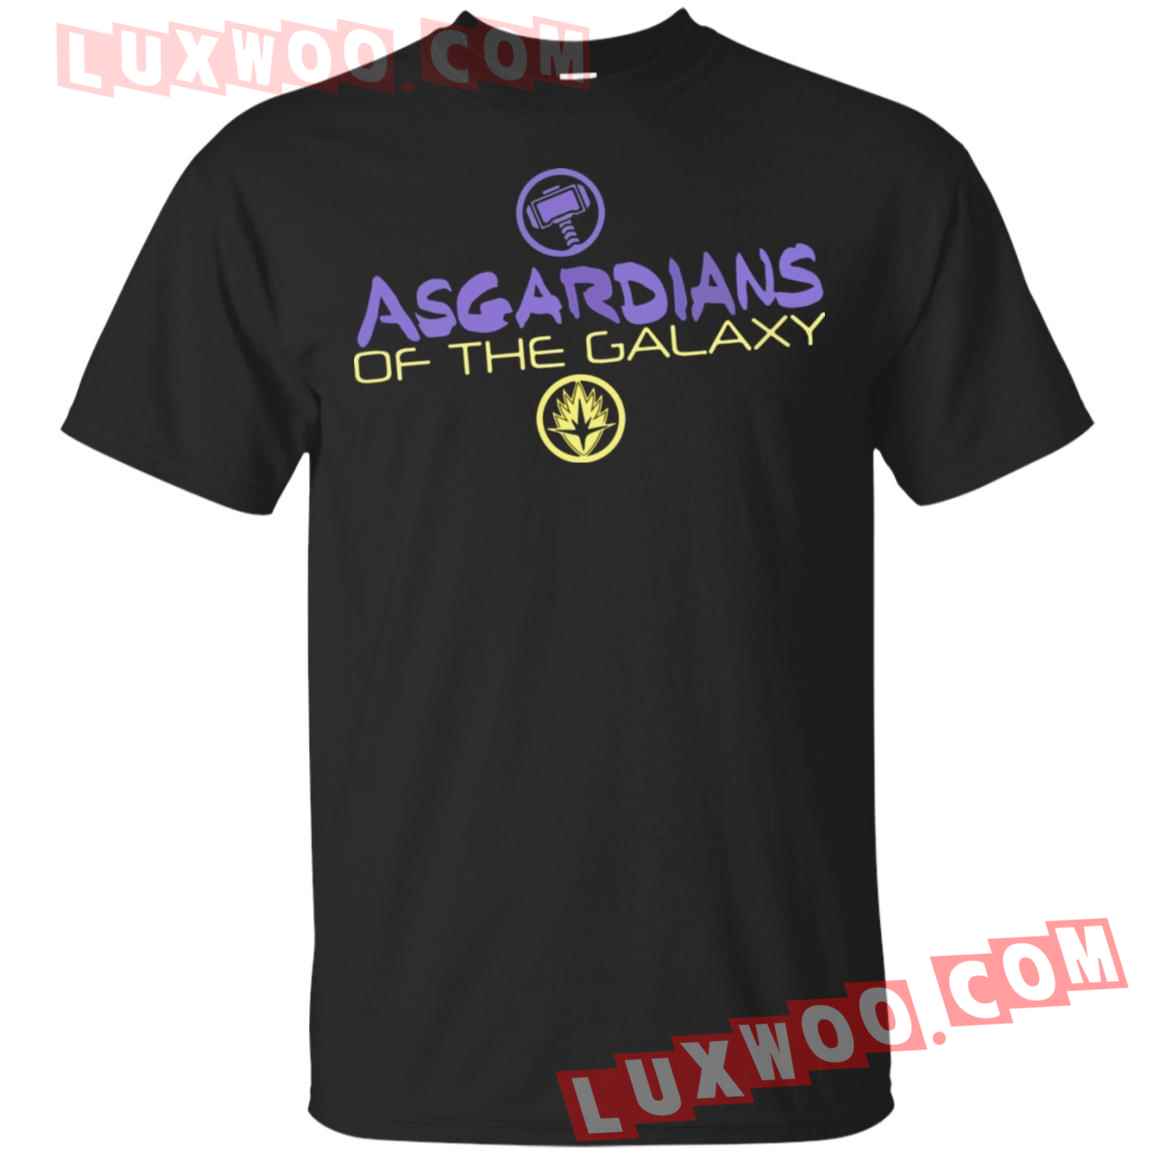 Asgardians Of The Galaxy Shirt